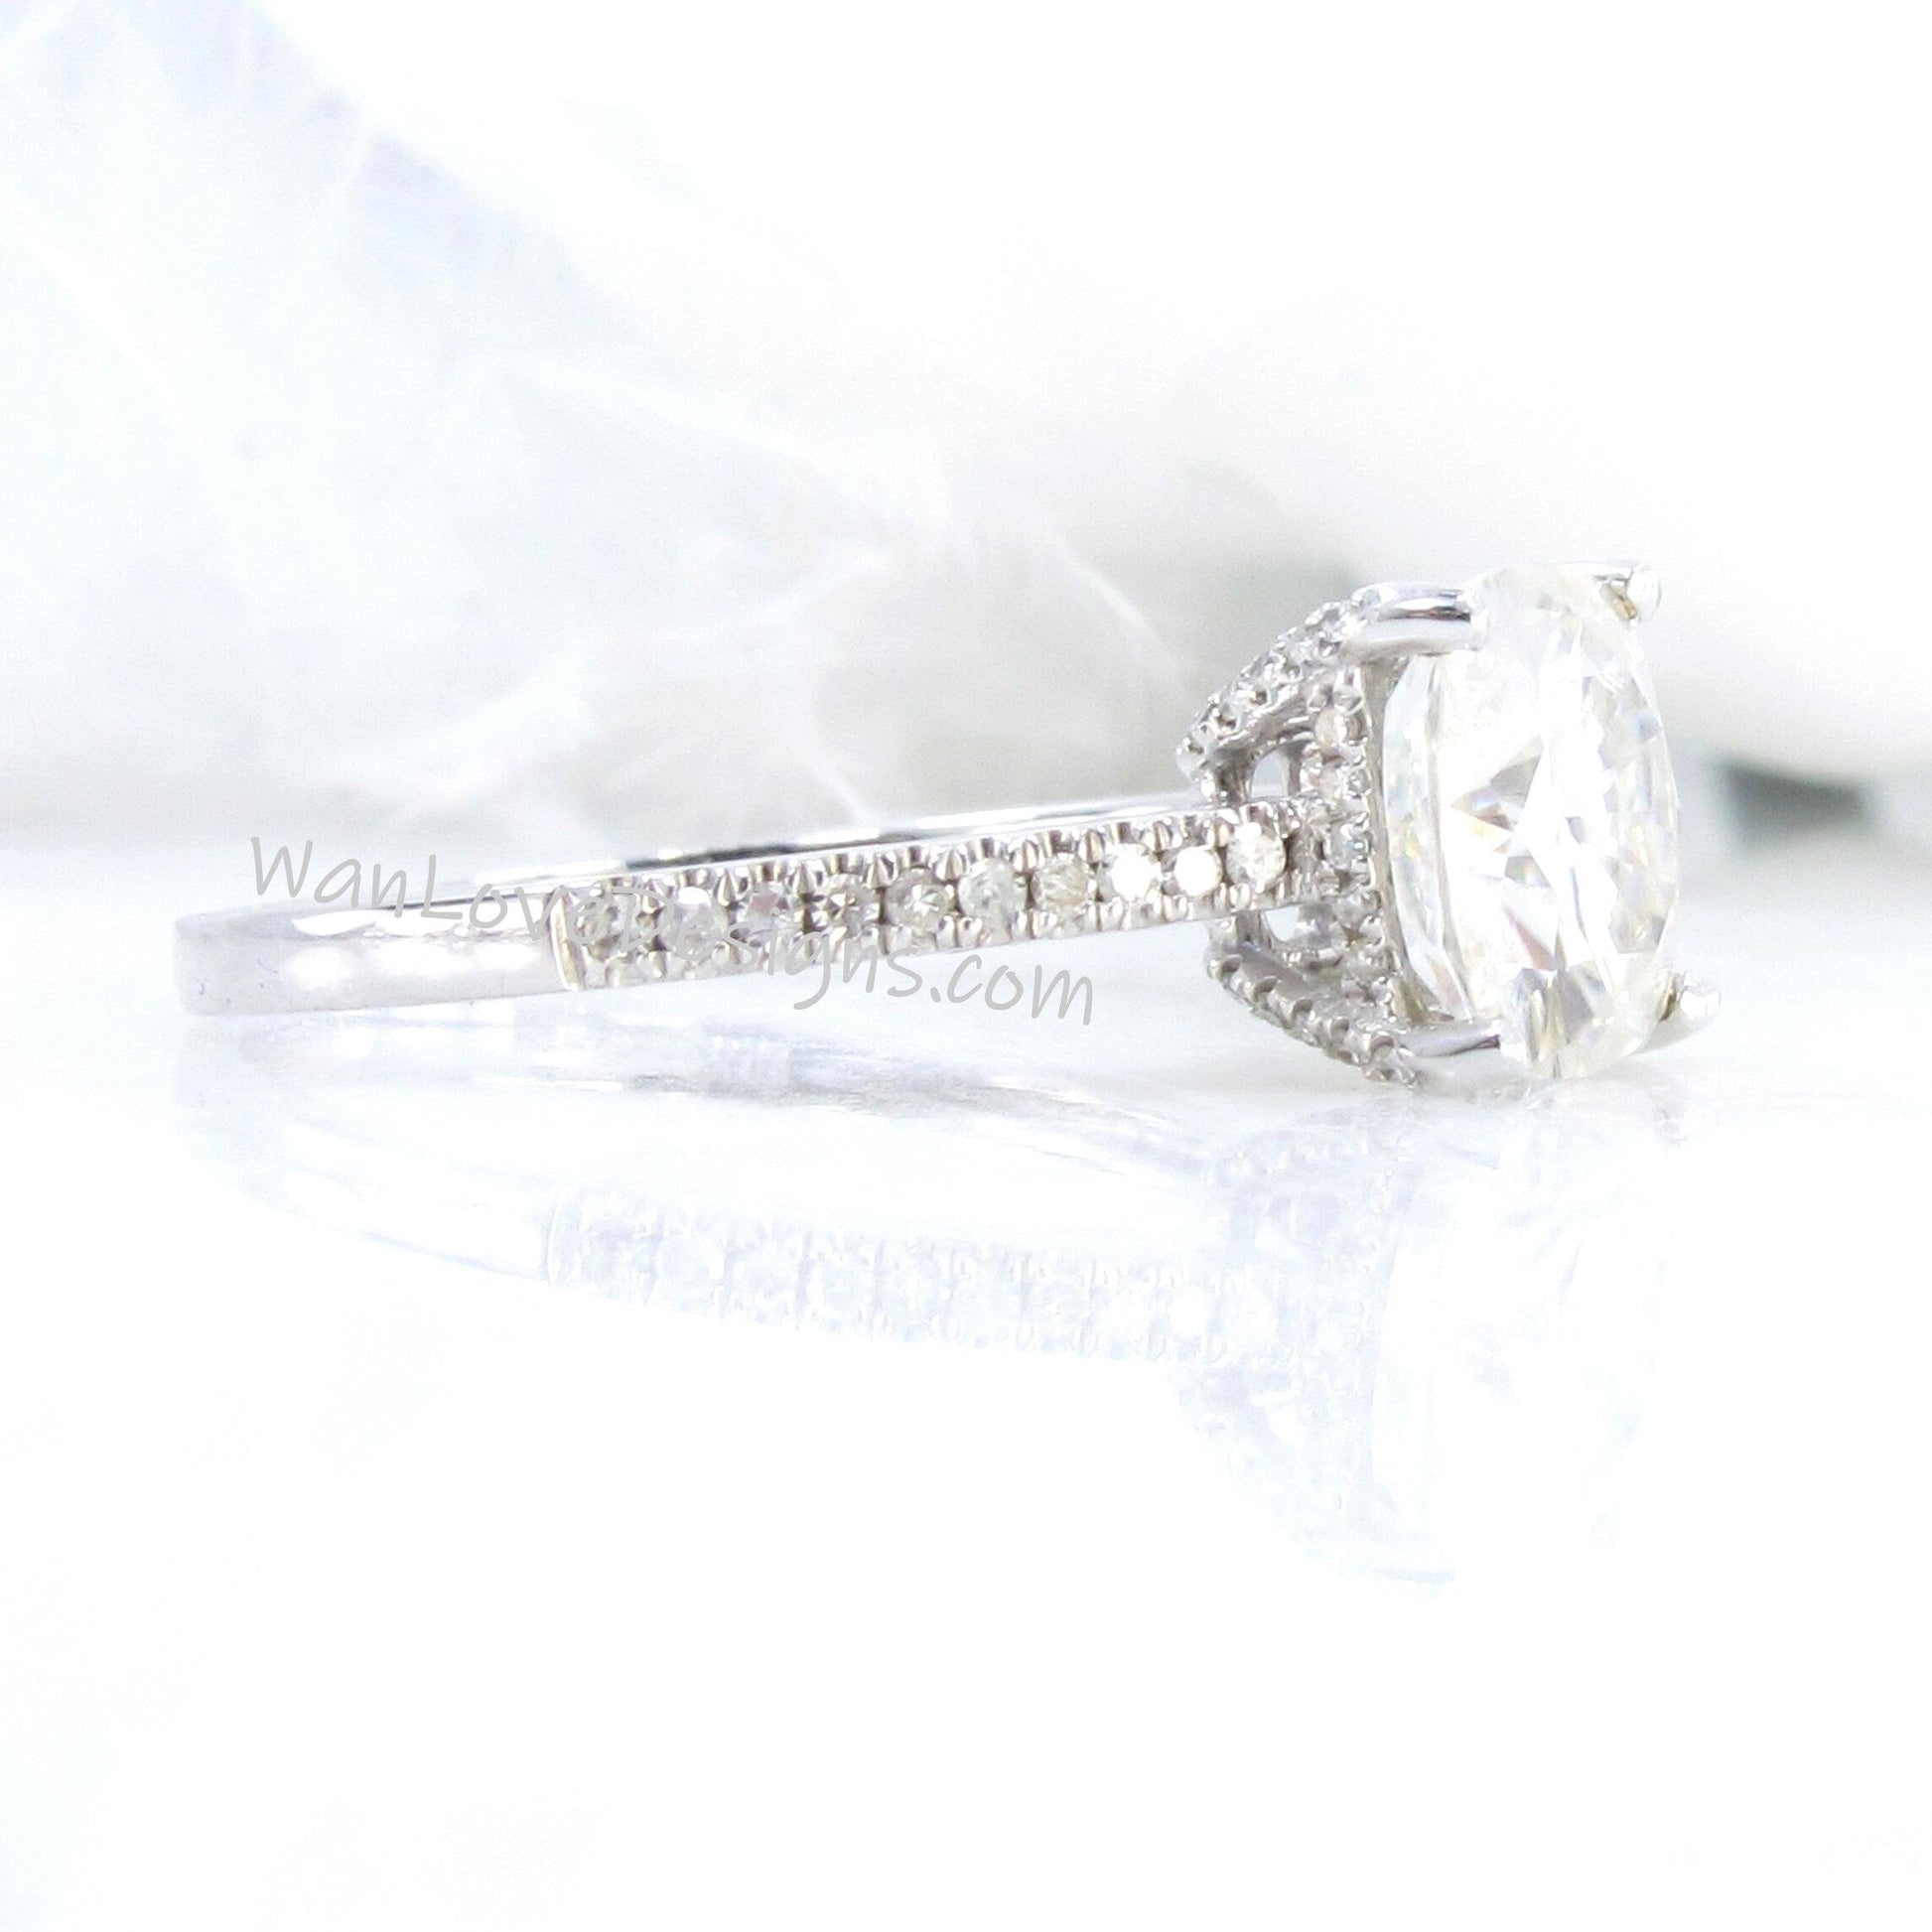 Cushion cut moissanite engagement ring white gold diamond side halo art deco half eternity ring vintage pave ring bridal anniversary ring Wan Love Designs